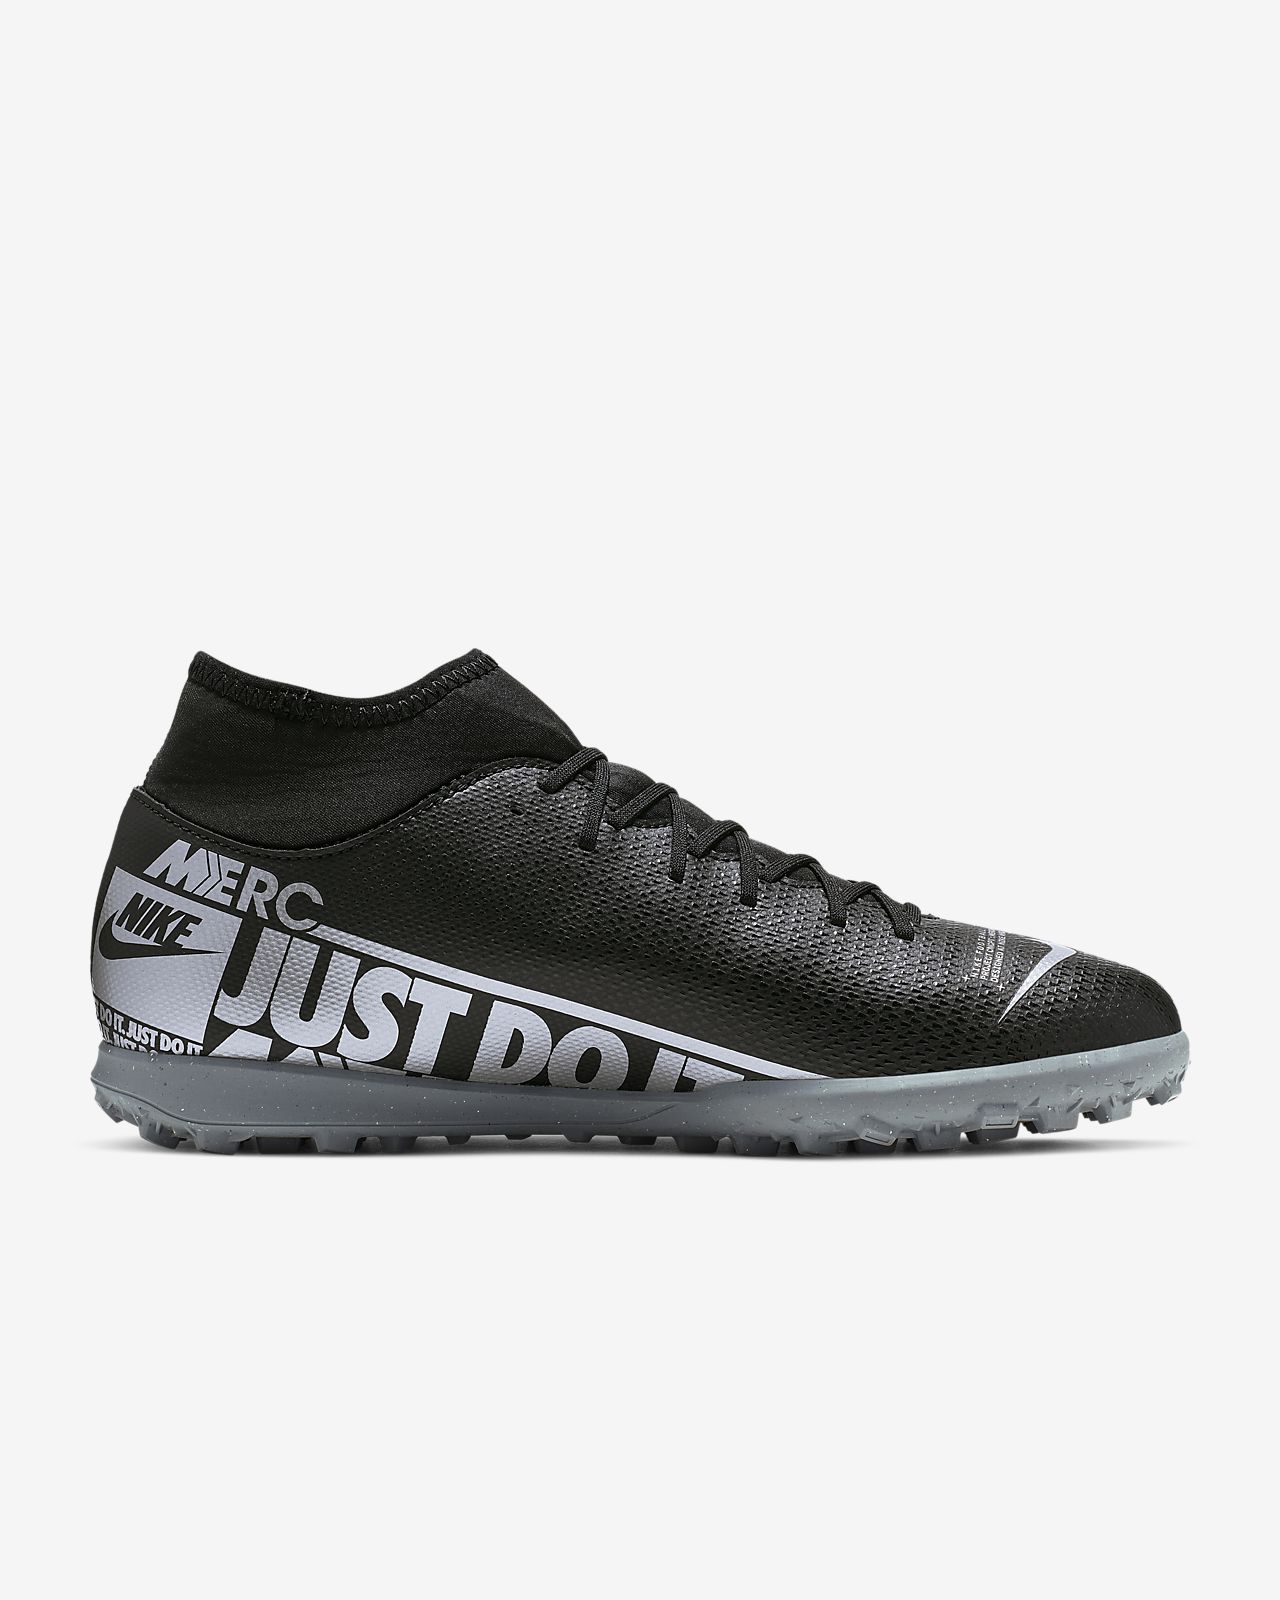 Nike Mercurial Superfly 7 Club Football Boots. Shop timão